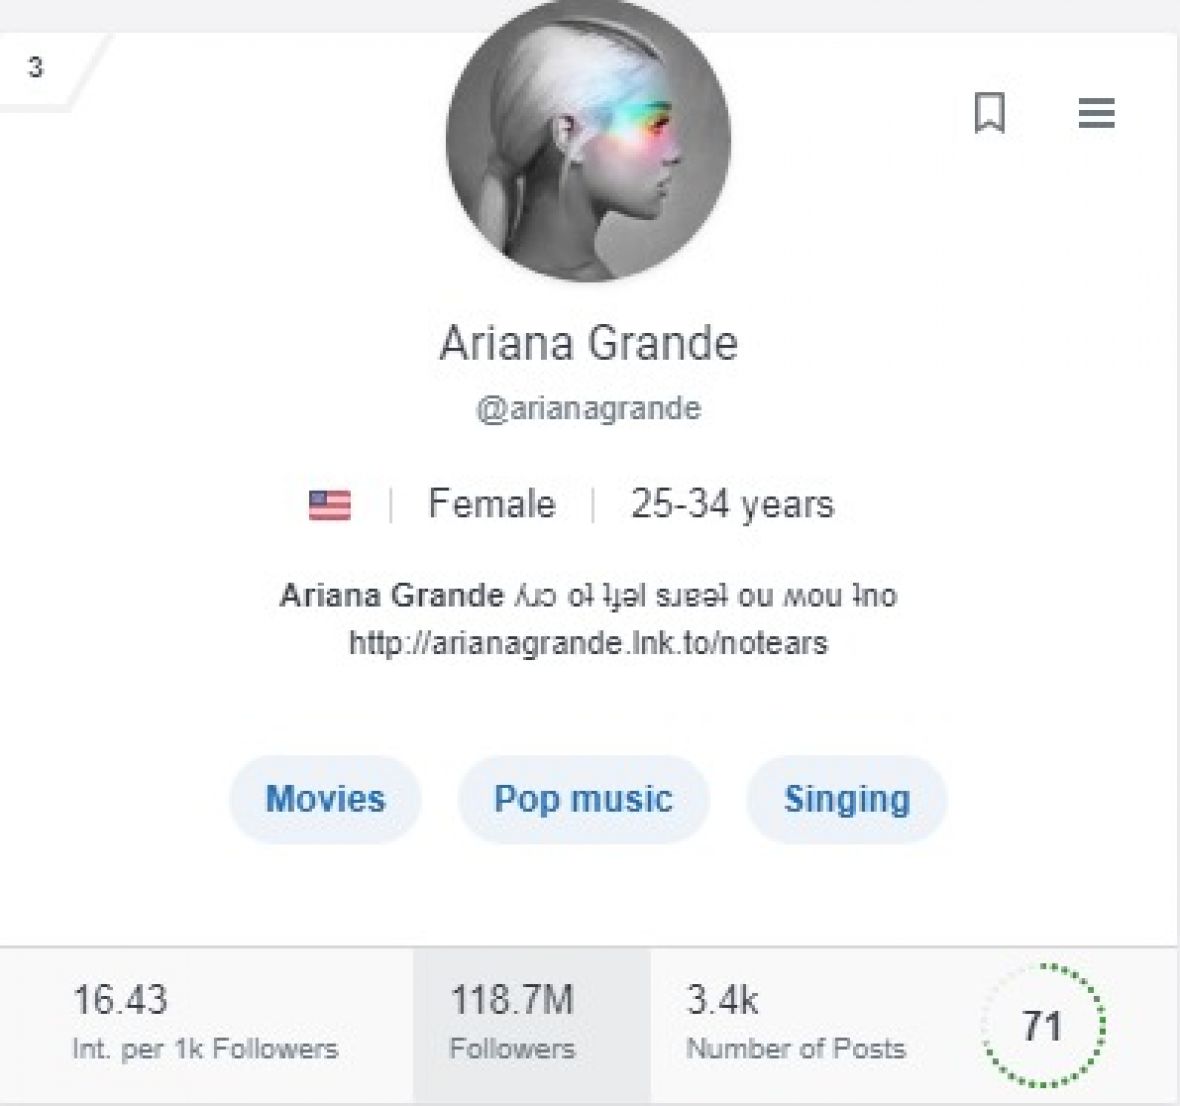 Ariana Grande - undefined